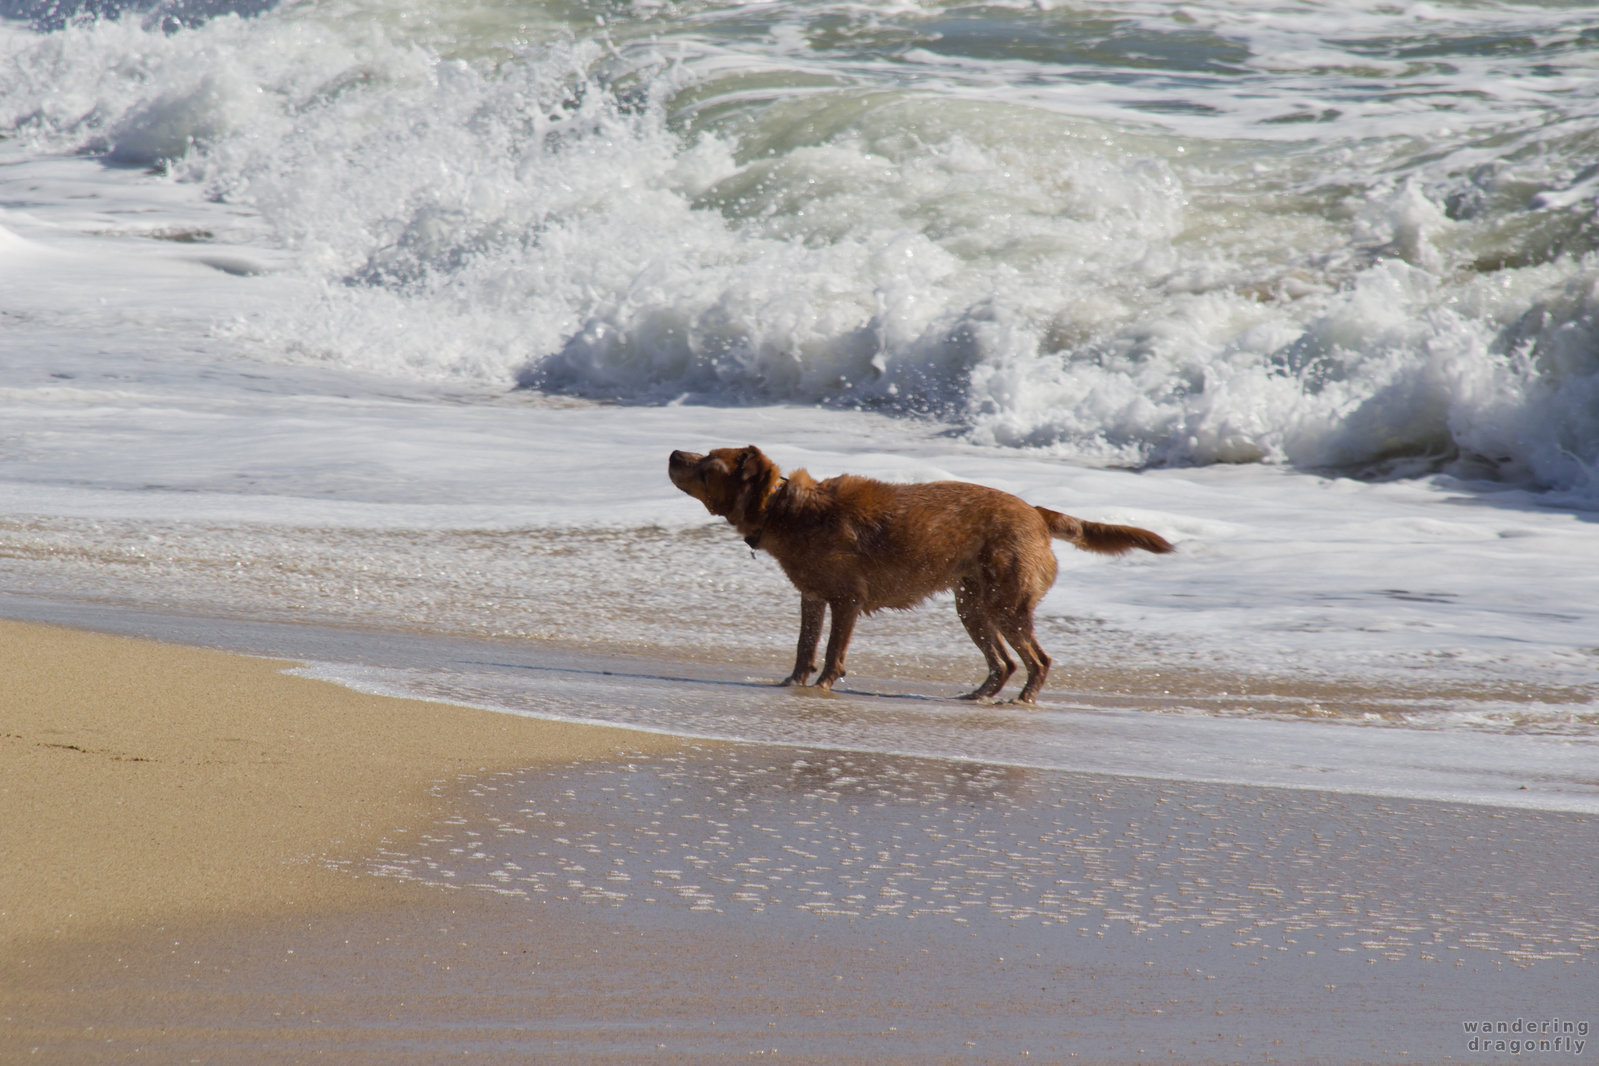 Dog shaking off water -- beach, dog, ocean